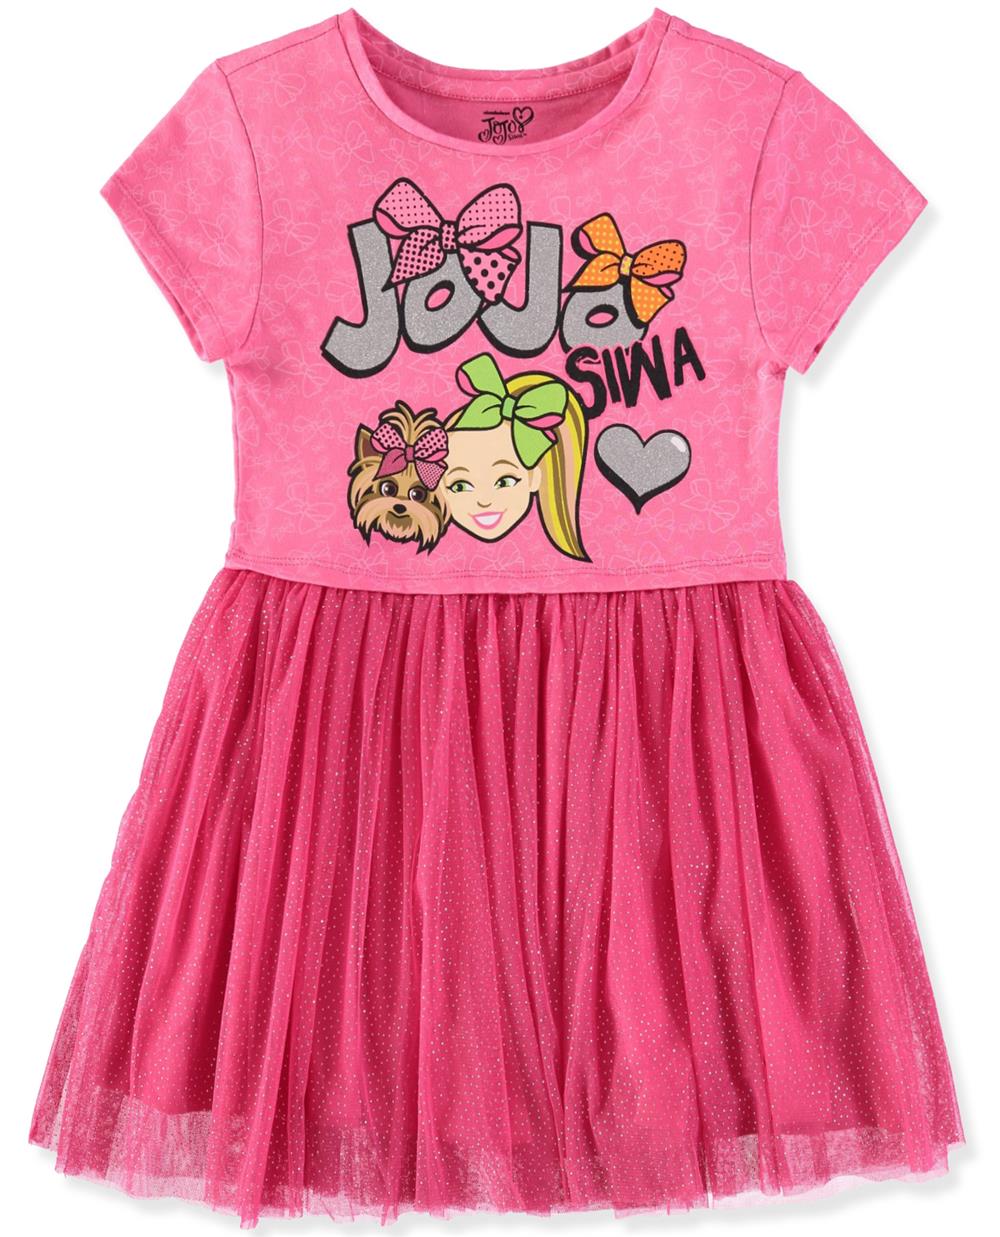 Nickelodeon Girls 4-16 Jojo Siwa Tutu Dress